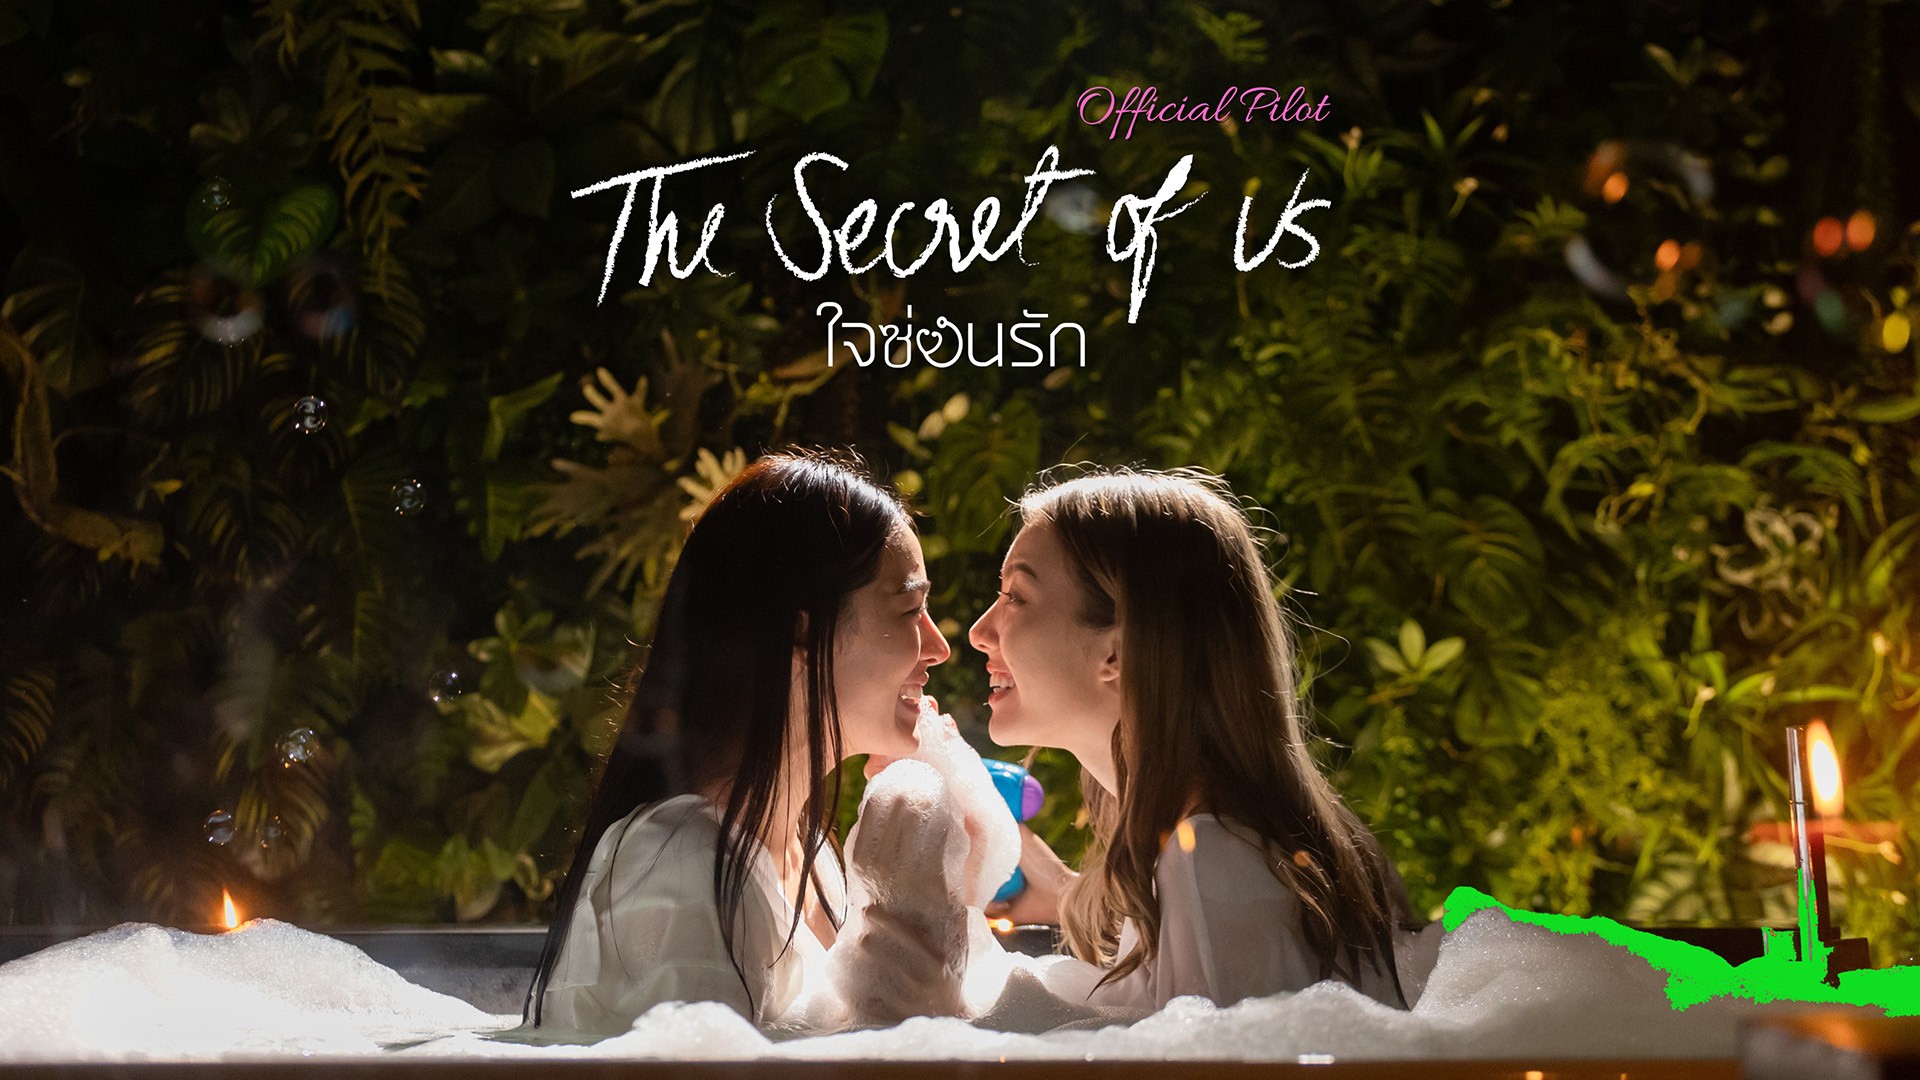 “THE SECRET OF US” (ใจซ่อนรัก) ซีรีส์ Girls Love